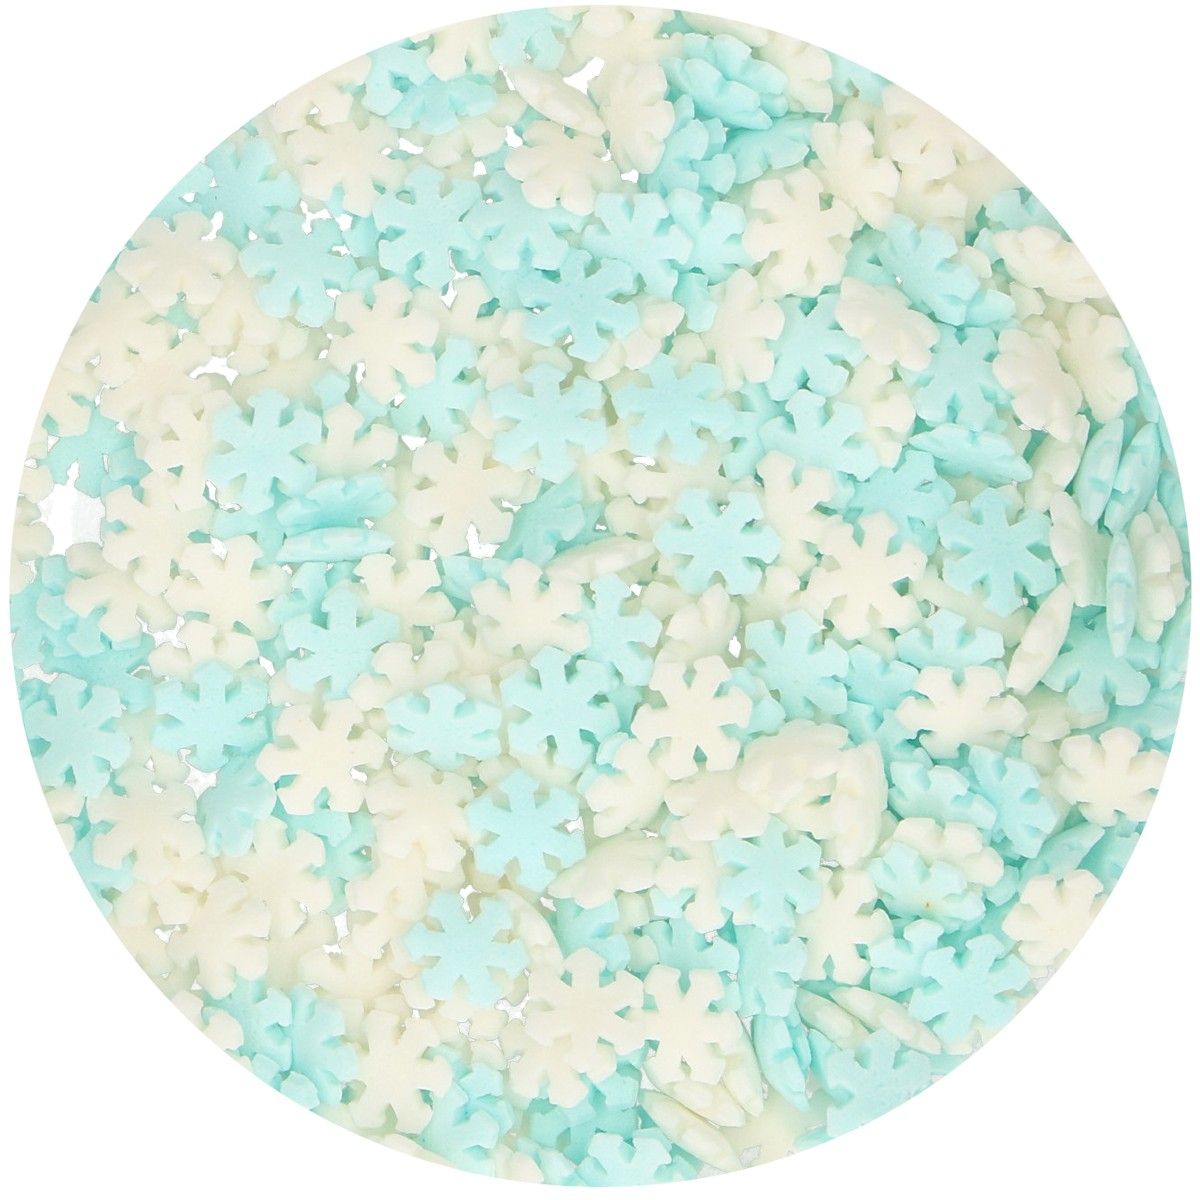 Funcakes sneeuwvlokken wit/blauw 50g